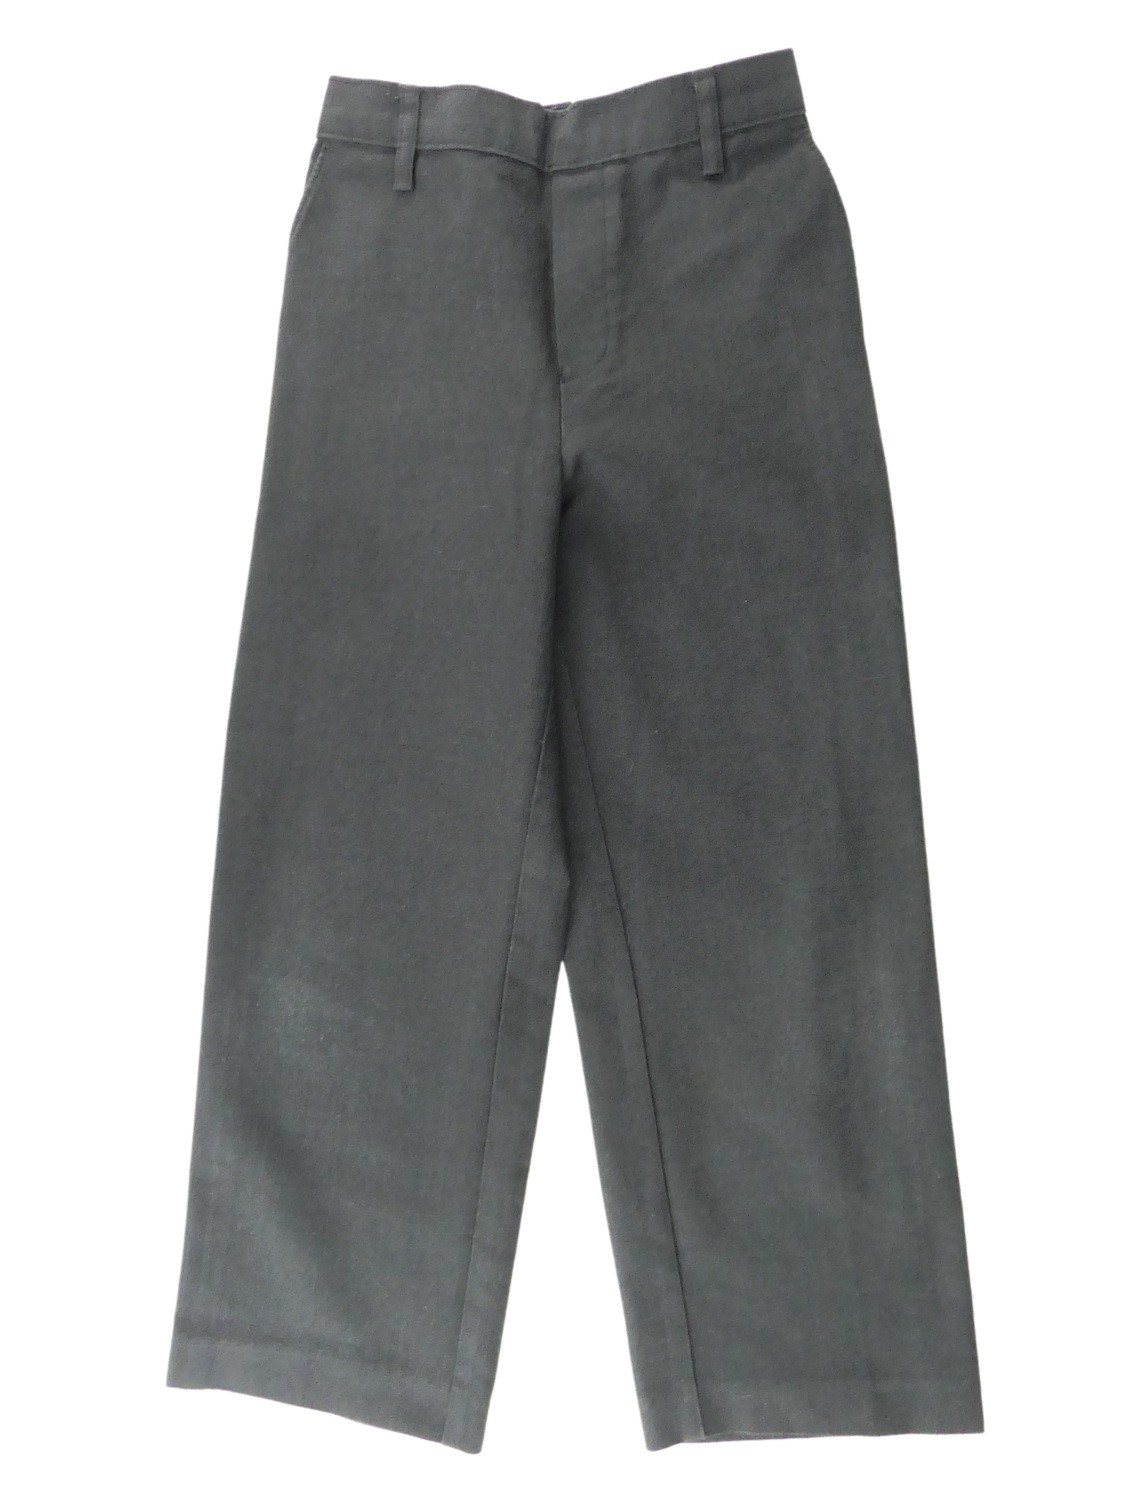 Pantalon chino gris foncé BHS taille 5 ans